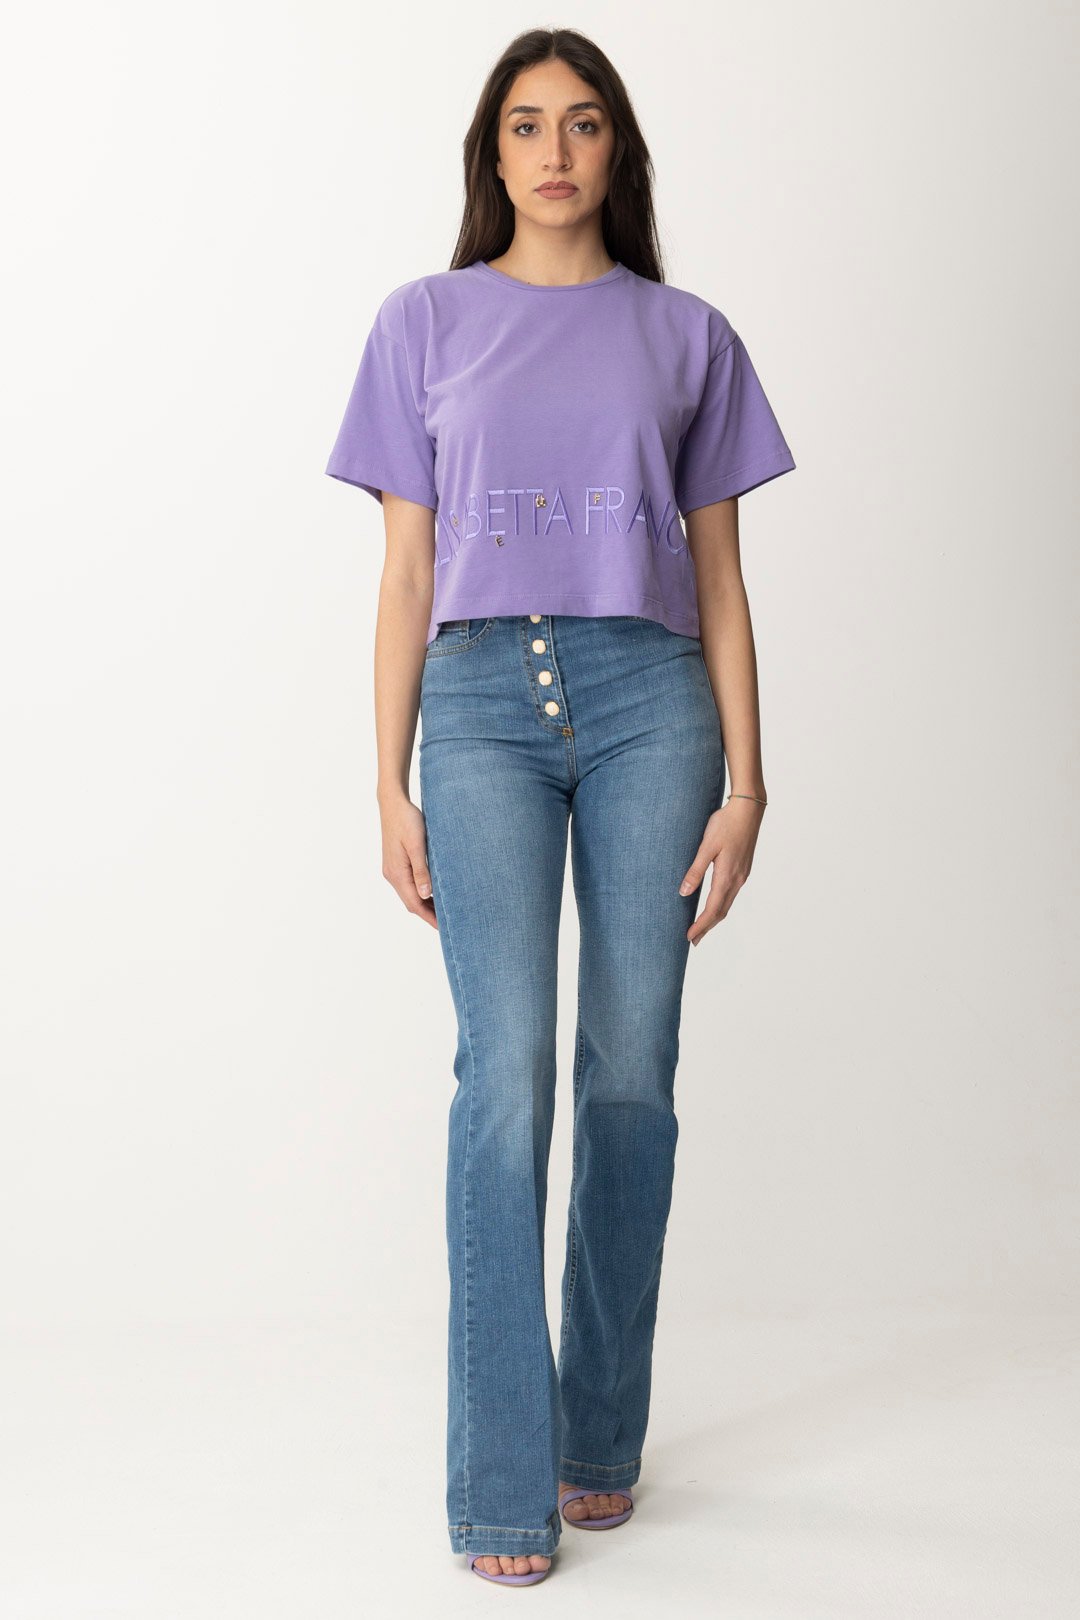 Vista previa: Elisabetta Franchi Camiseta con logo y charms IRIS